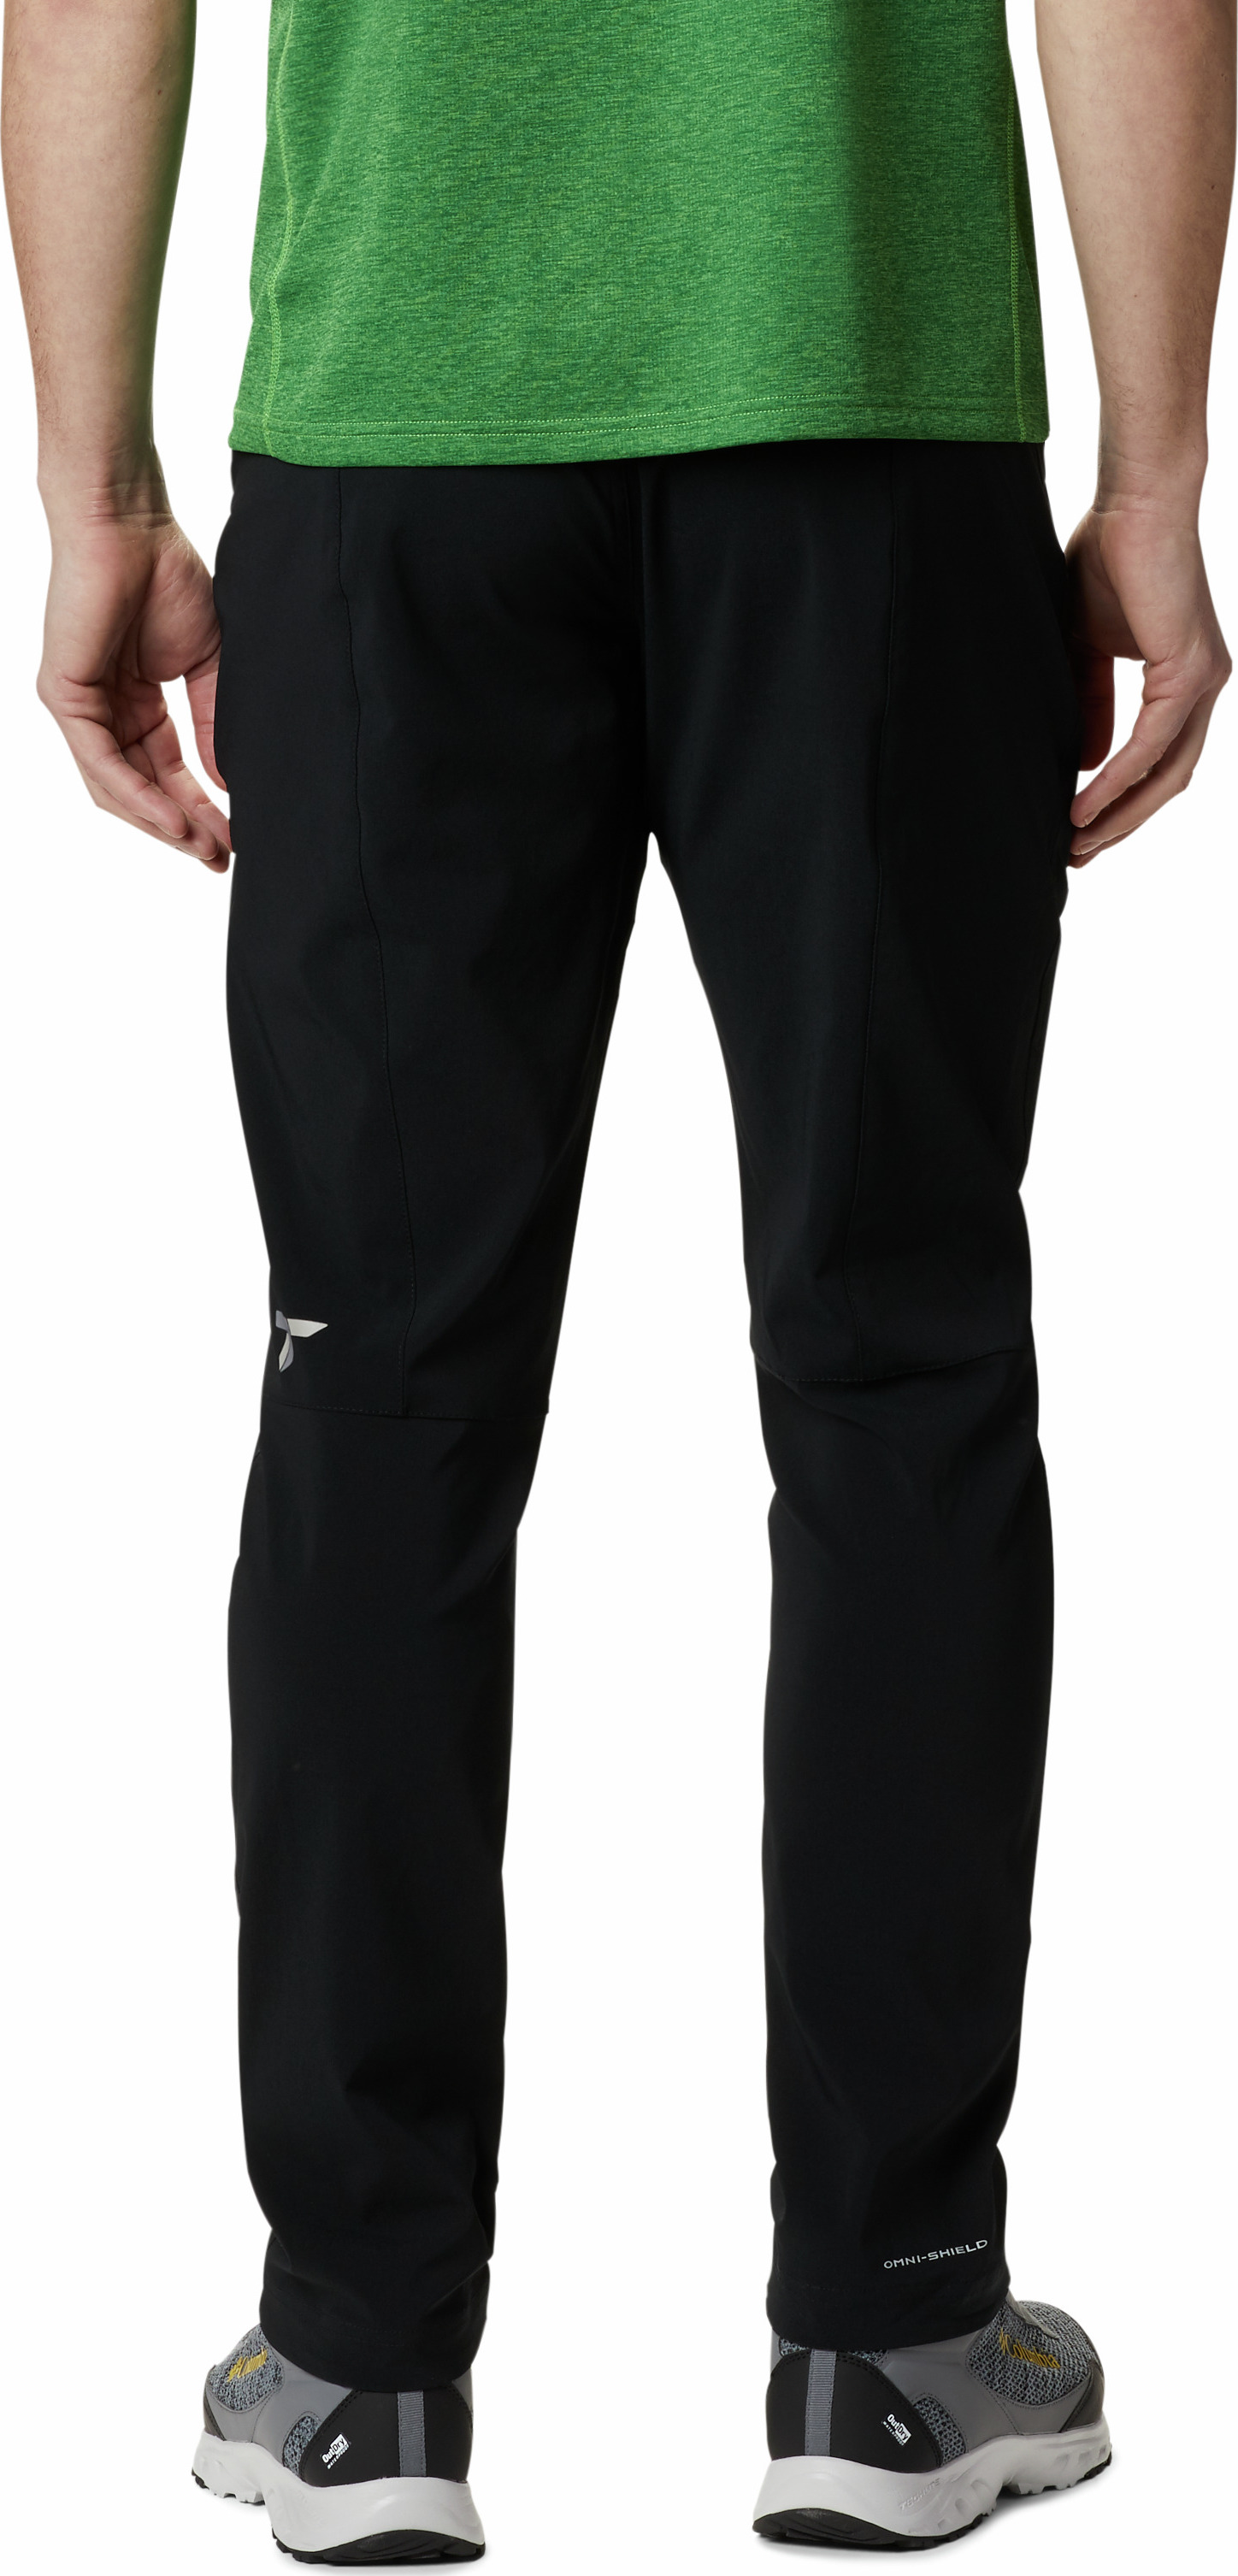 Men's Columbia Omni-Shield Advanced Repellency Pants Size 44 Gray  Lightweight | eBay